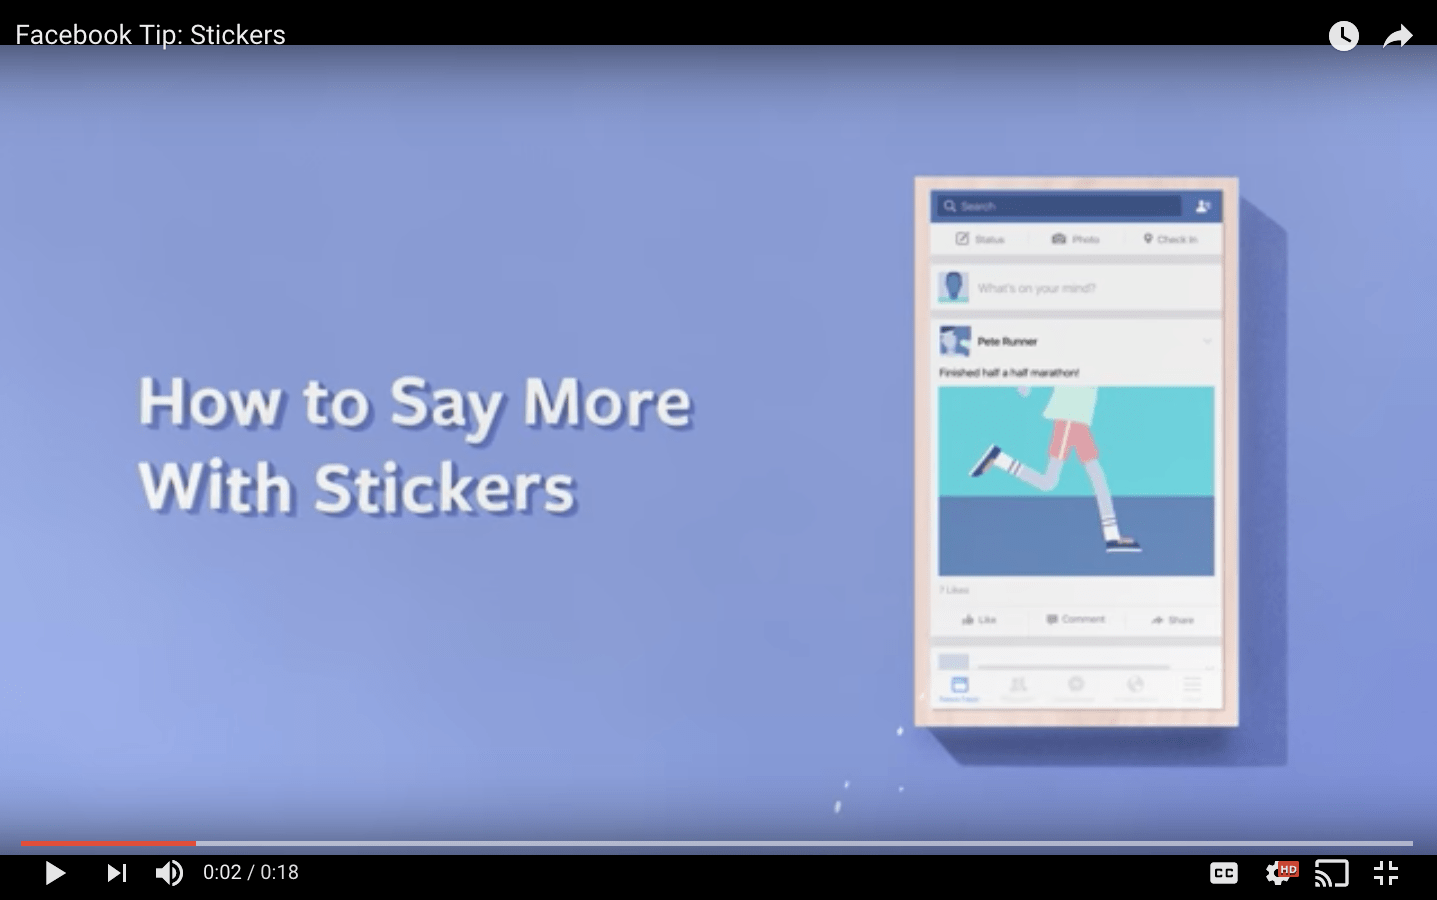 Screenshot of Facebook Tip: Stickers video from Facebook.